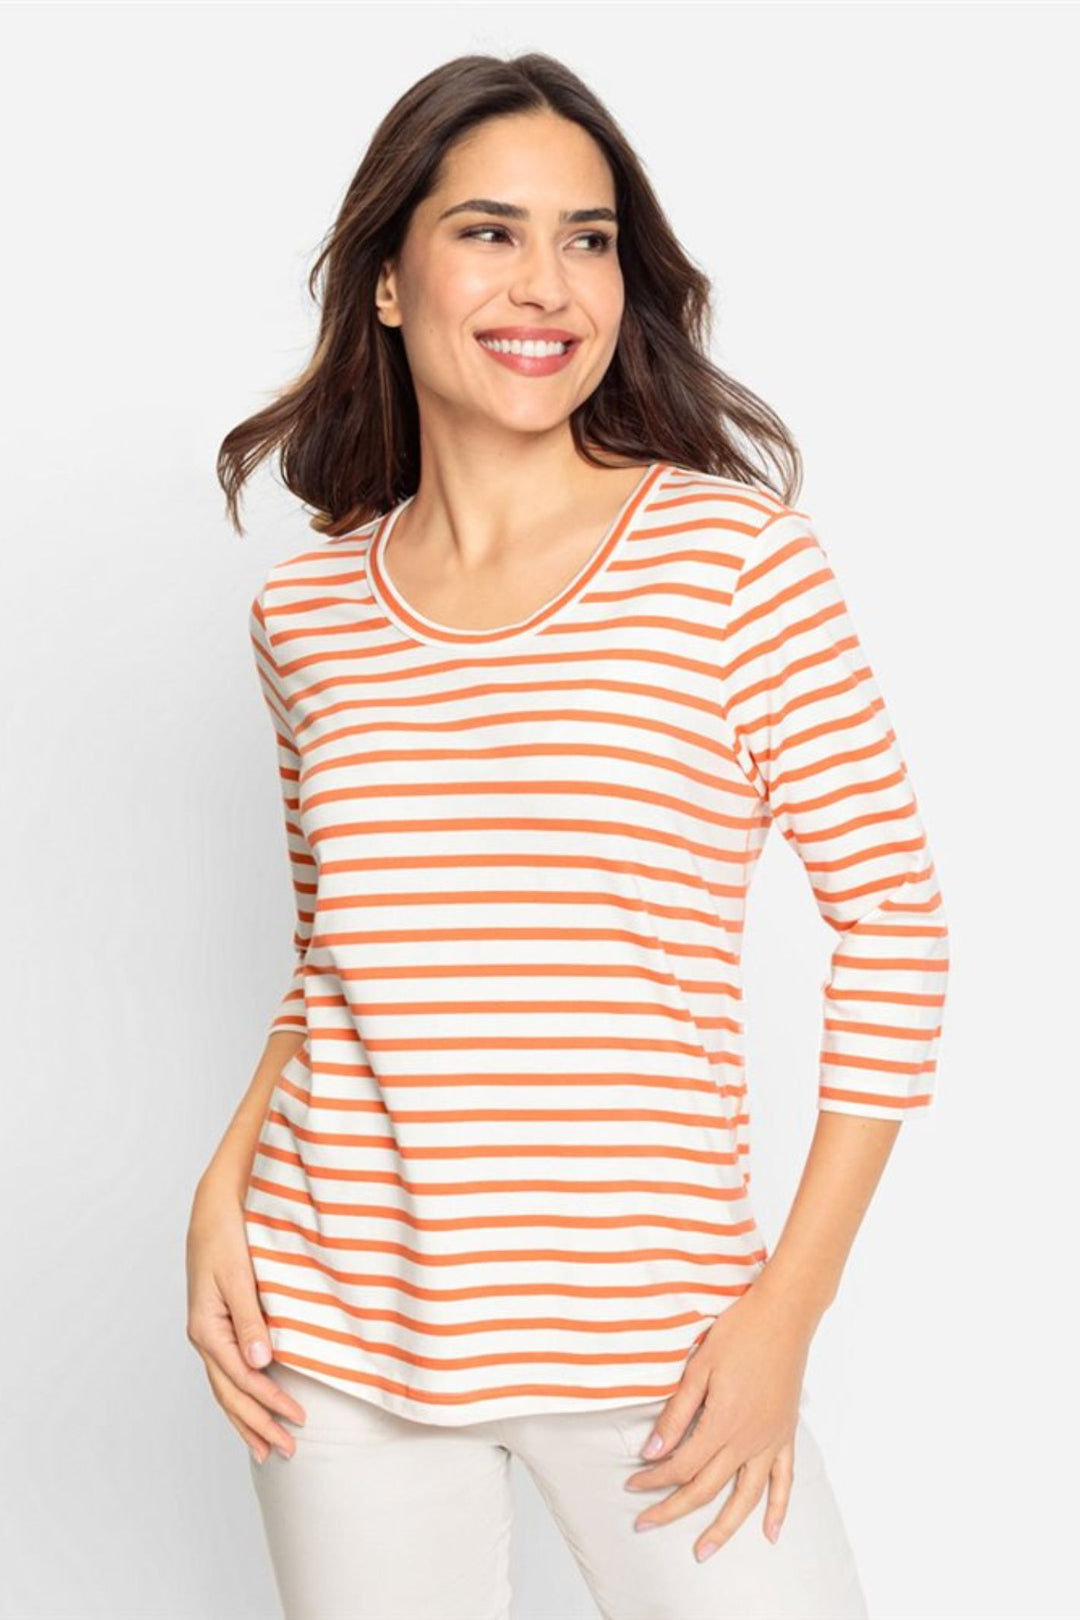 Olsen 11104770 Apricot Crush Stripe T-Shirt